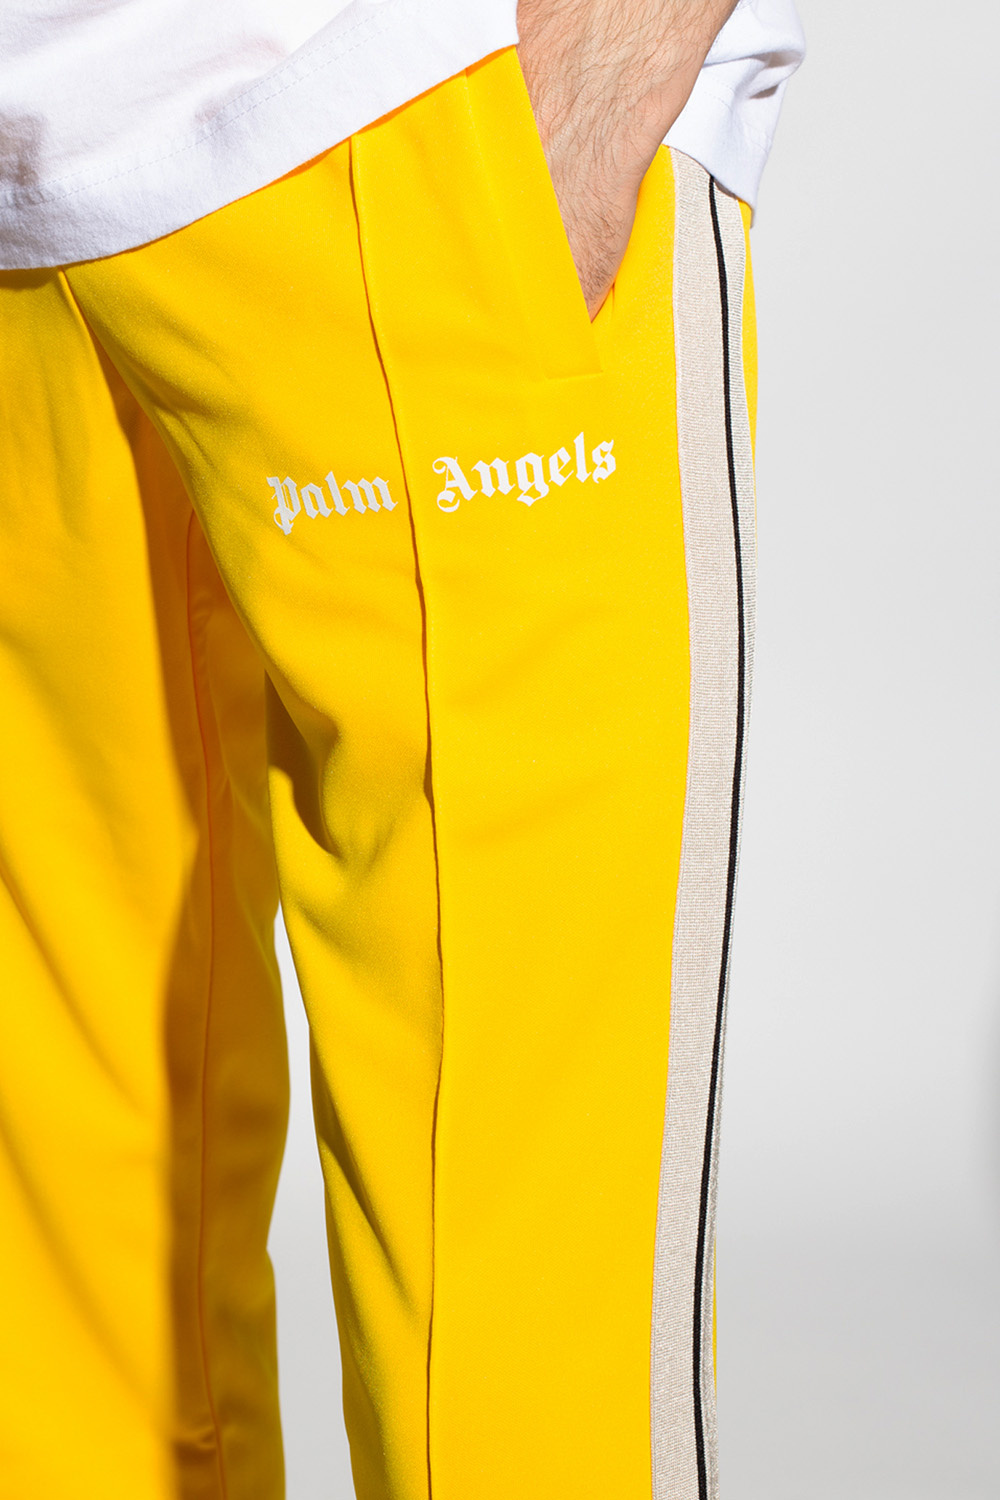 Palm Angels J Brand mid-rise skinny jeans